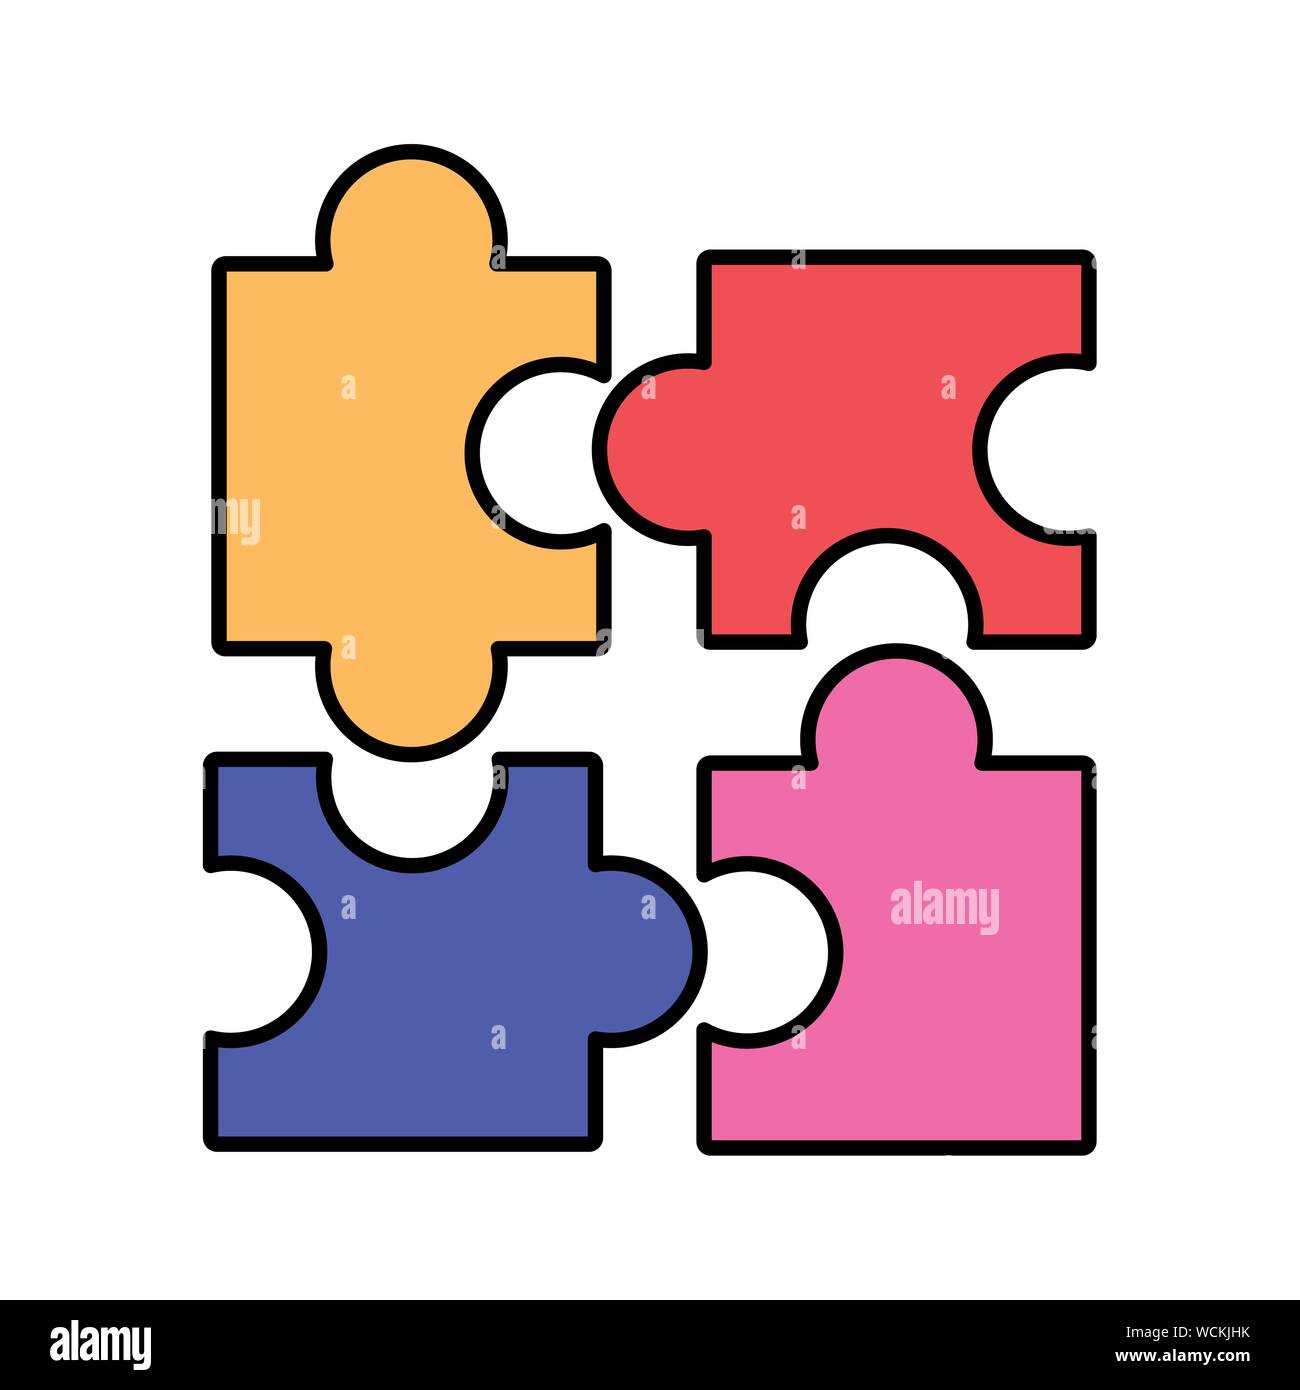 Puzzle game design Stock Vector